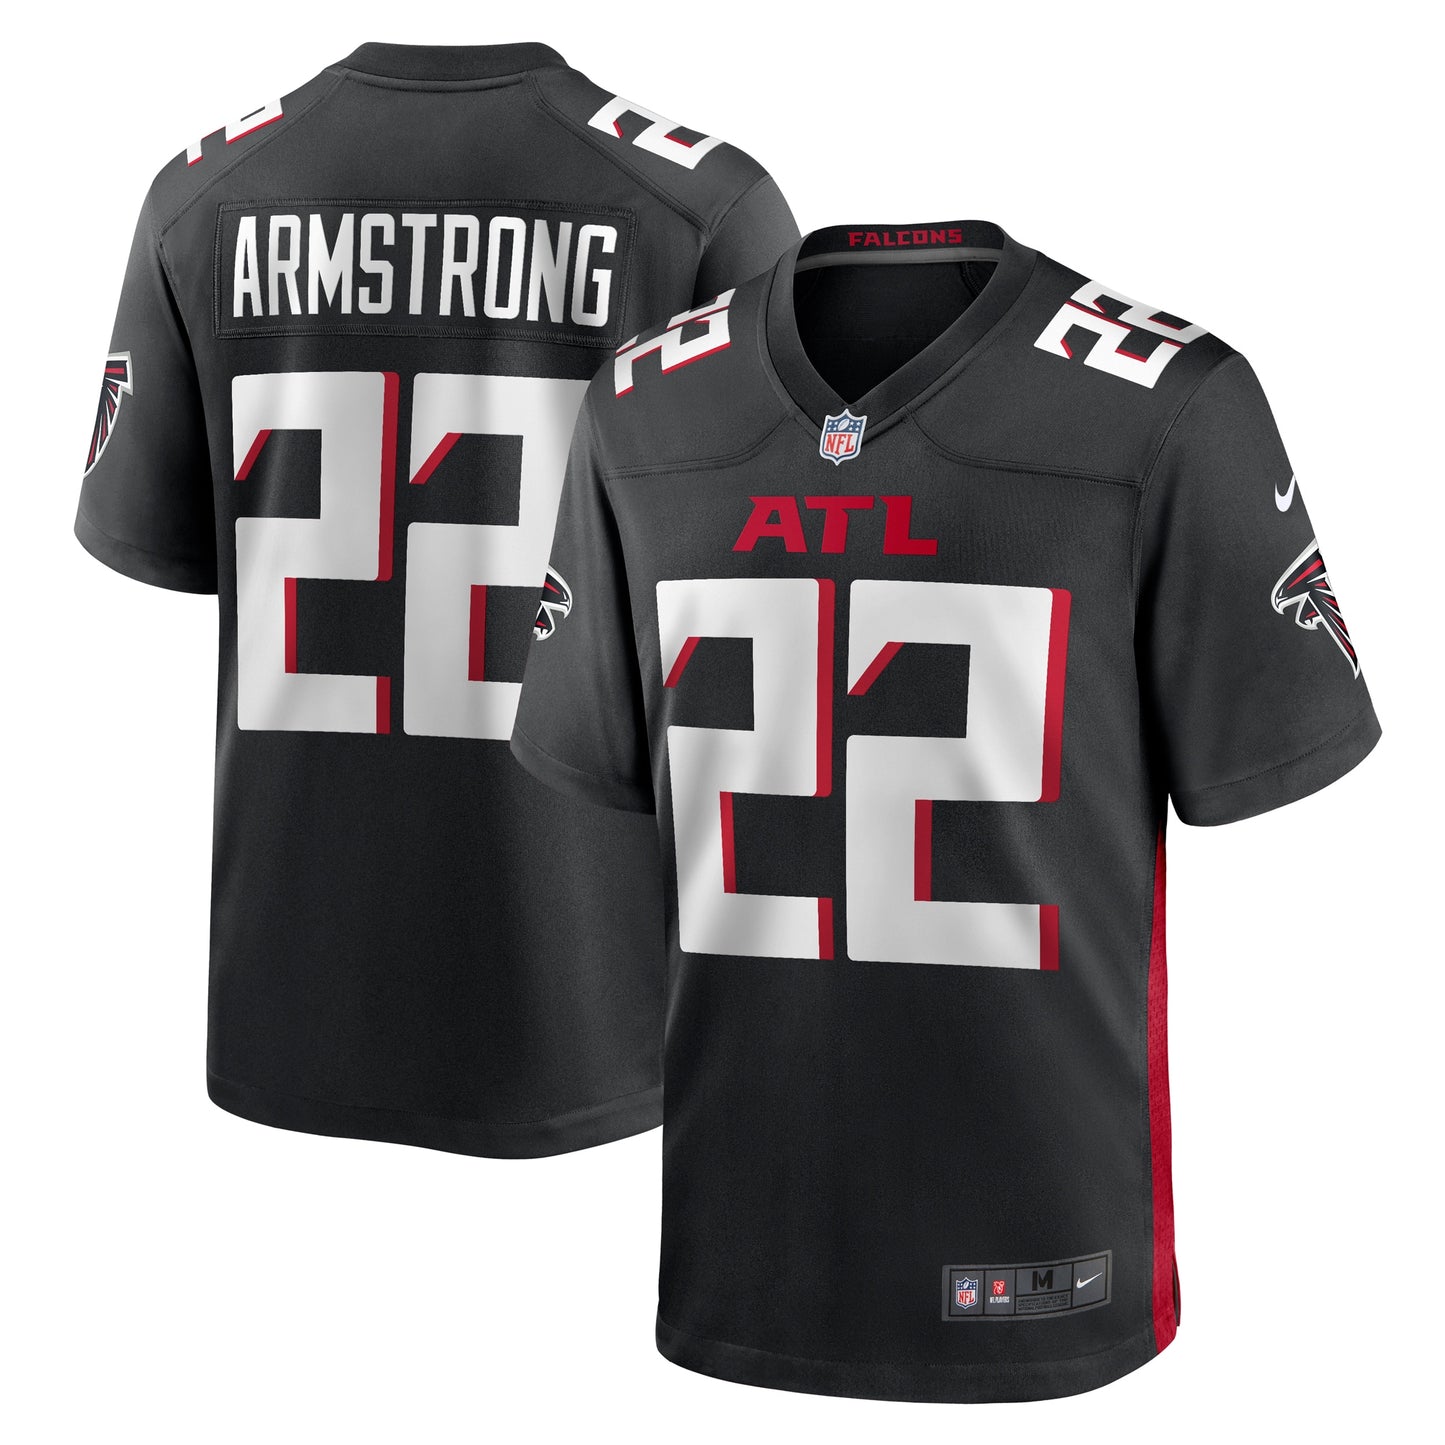 Cornell Armstrong Atlanta Falcons Nike Team Game Jersey - Black